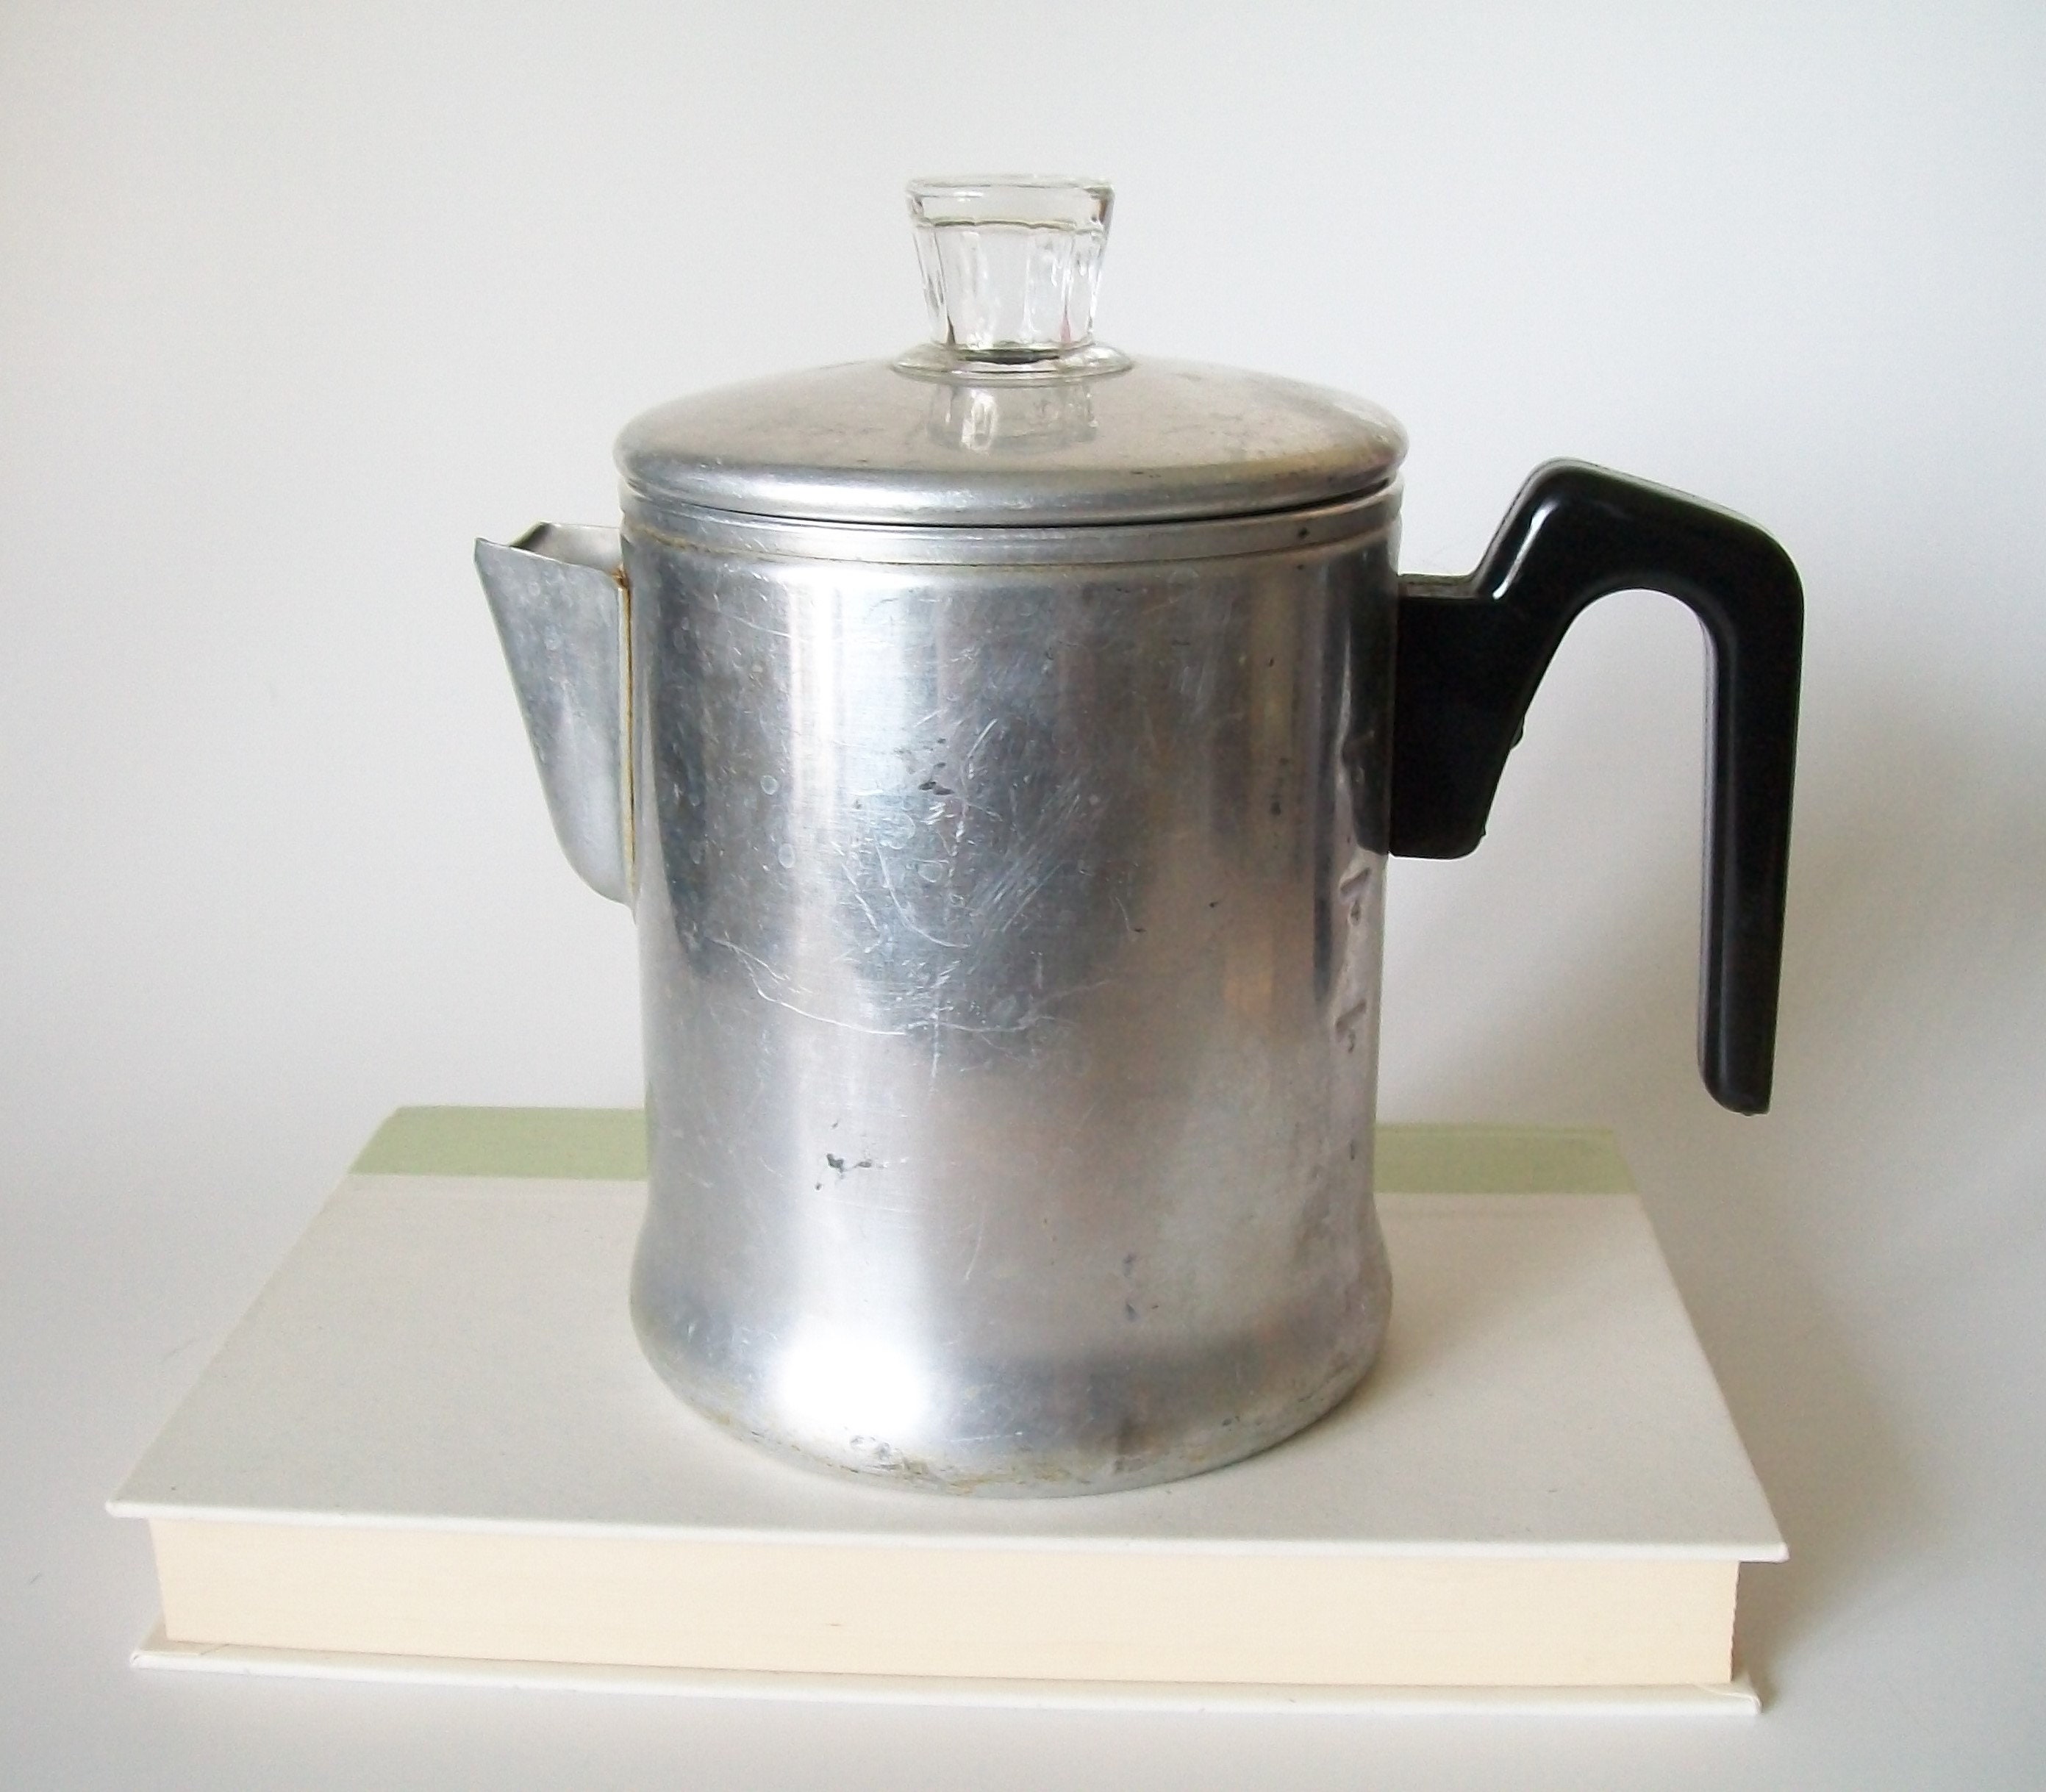 Kitchen, Vintage Aluminum Coffee Pot Glass Percolator Wooden Handle